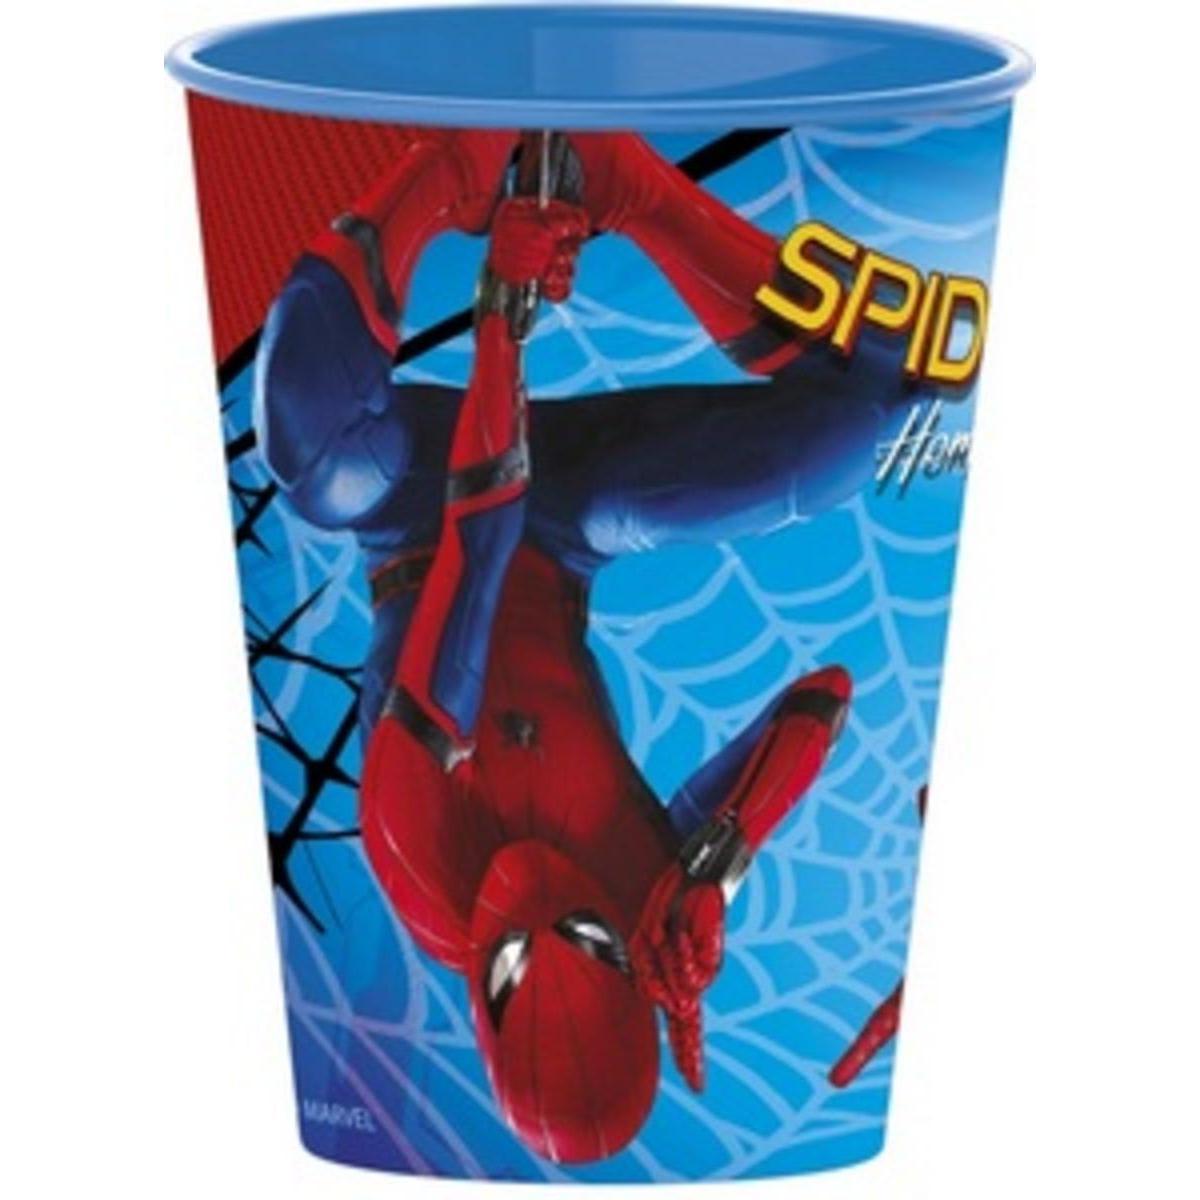 Spider-man gobelet 260 ml en plastique x 1 pièce